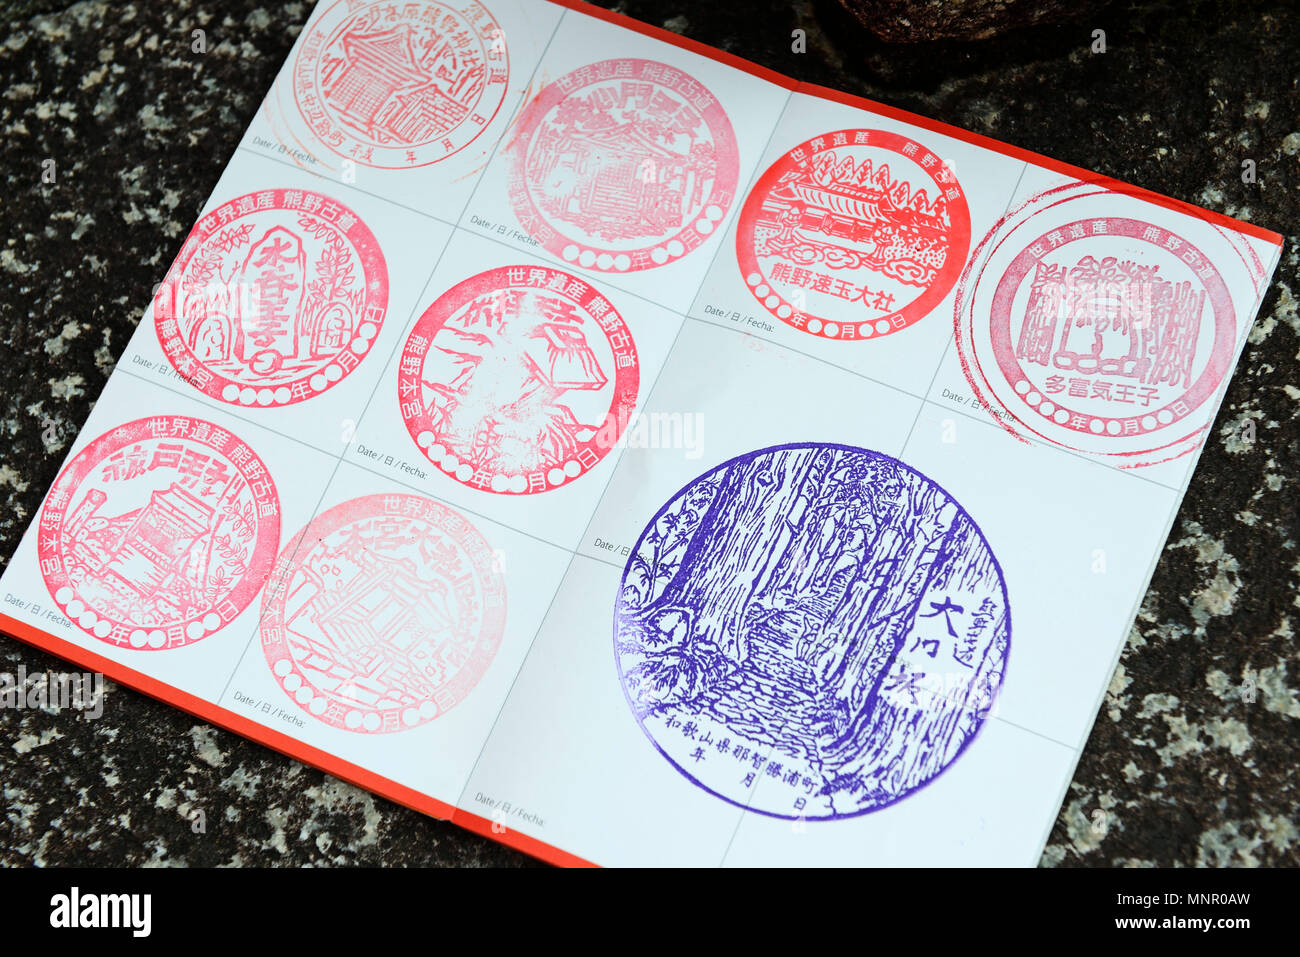 Pasaporte de Peregrino con sellos registrados de la estación de peregrino, Ruta Nakahechi, Kumano Kodo camino de peregrinación, Japón Foto de stock